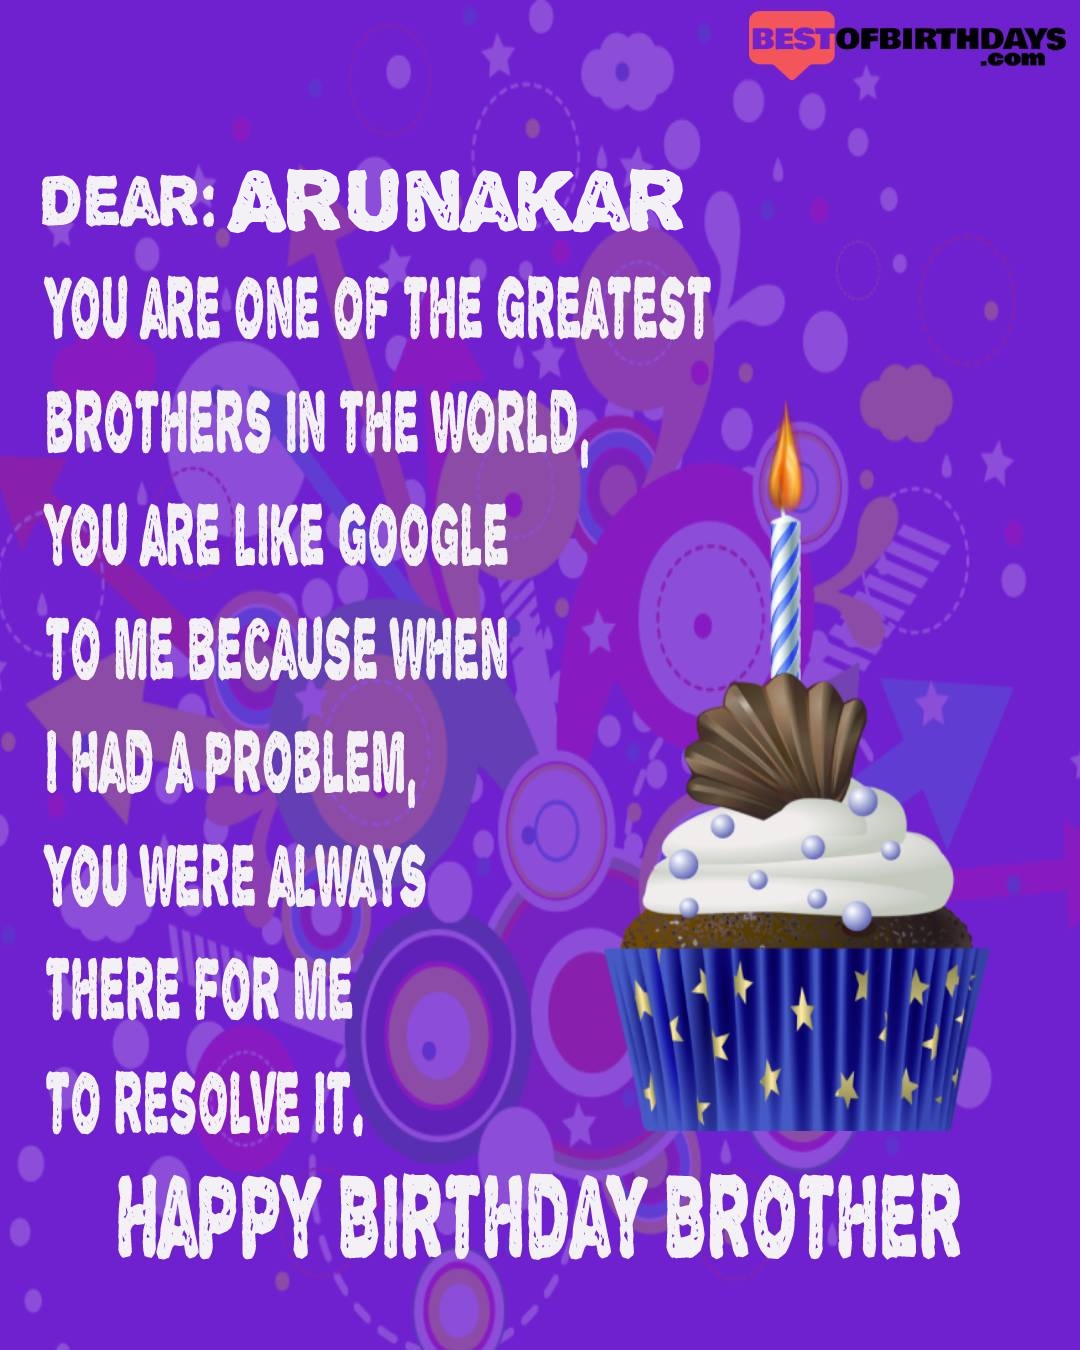 Happy birthday arunakar bhai brother bro